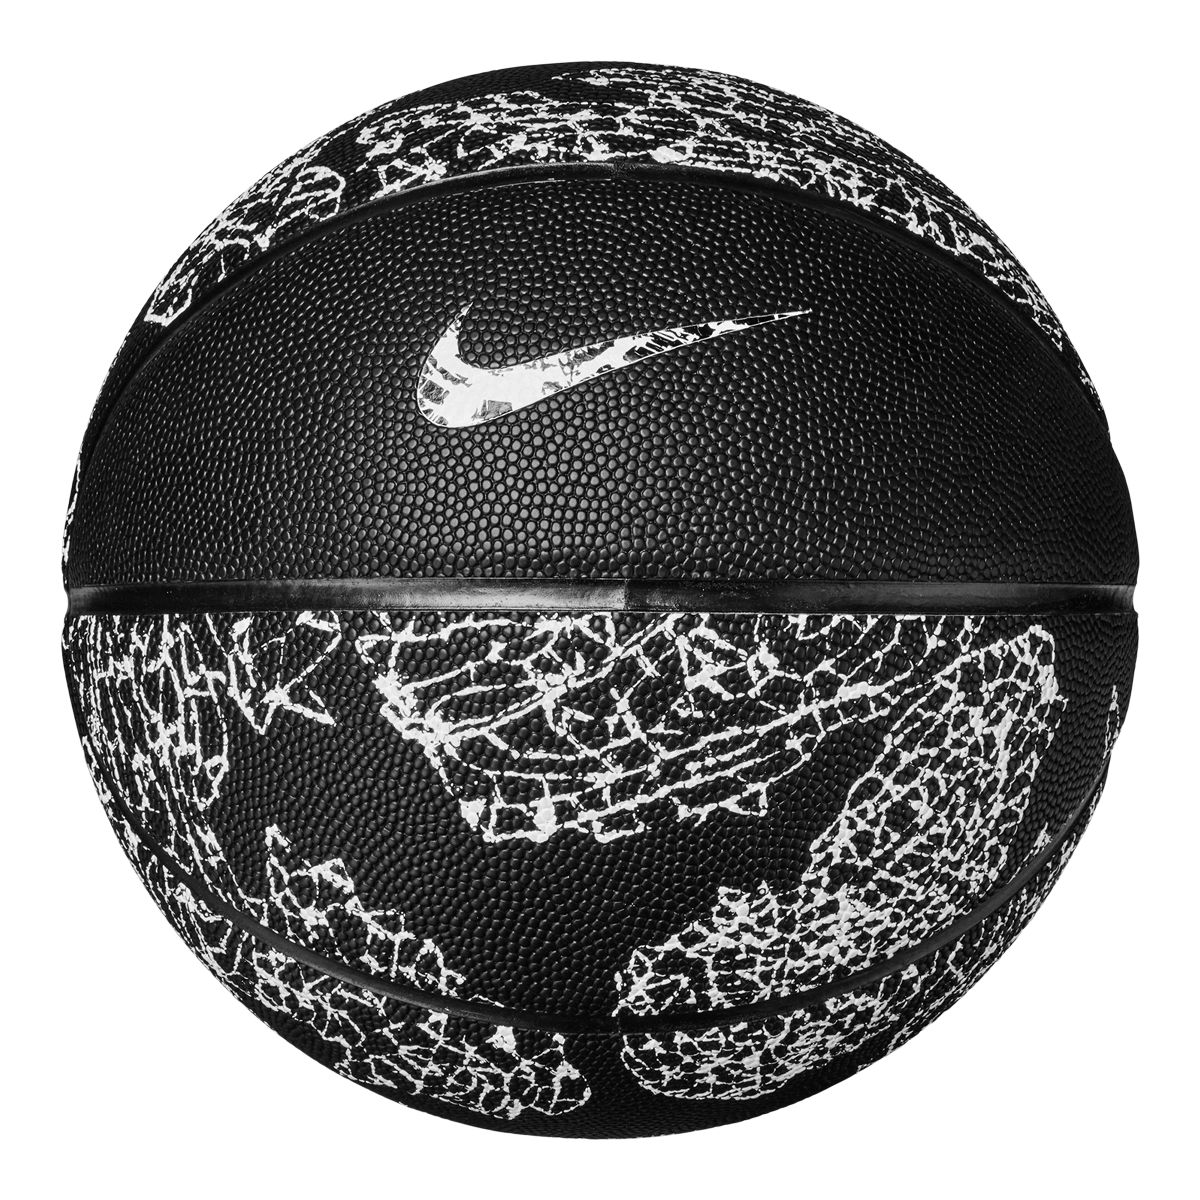 Nike Premium Energy Basketball - Size 7